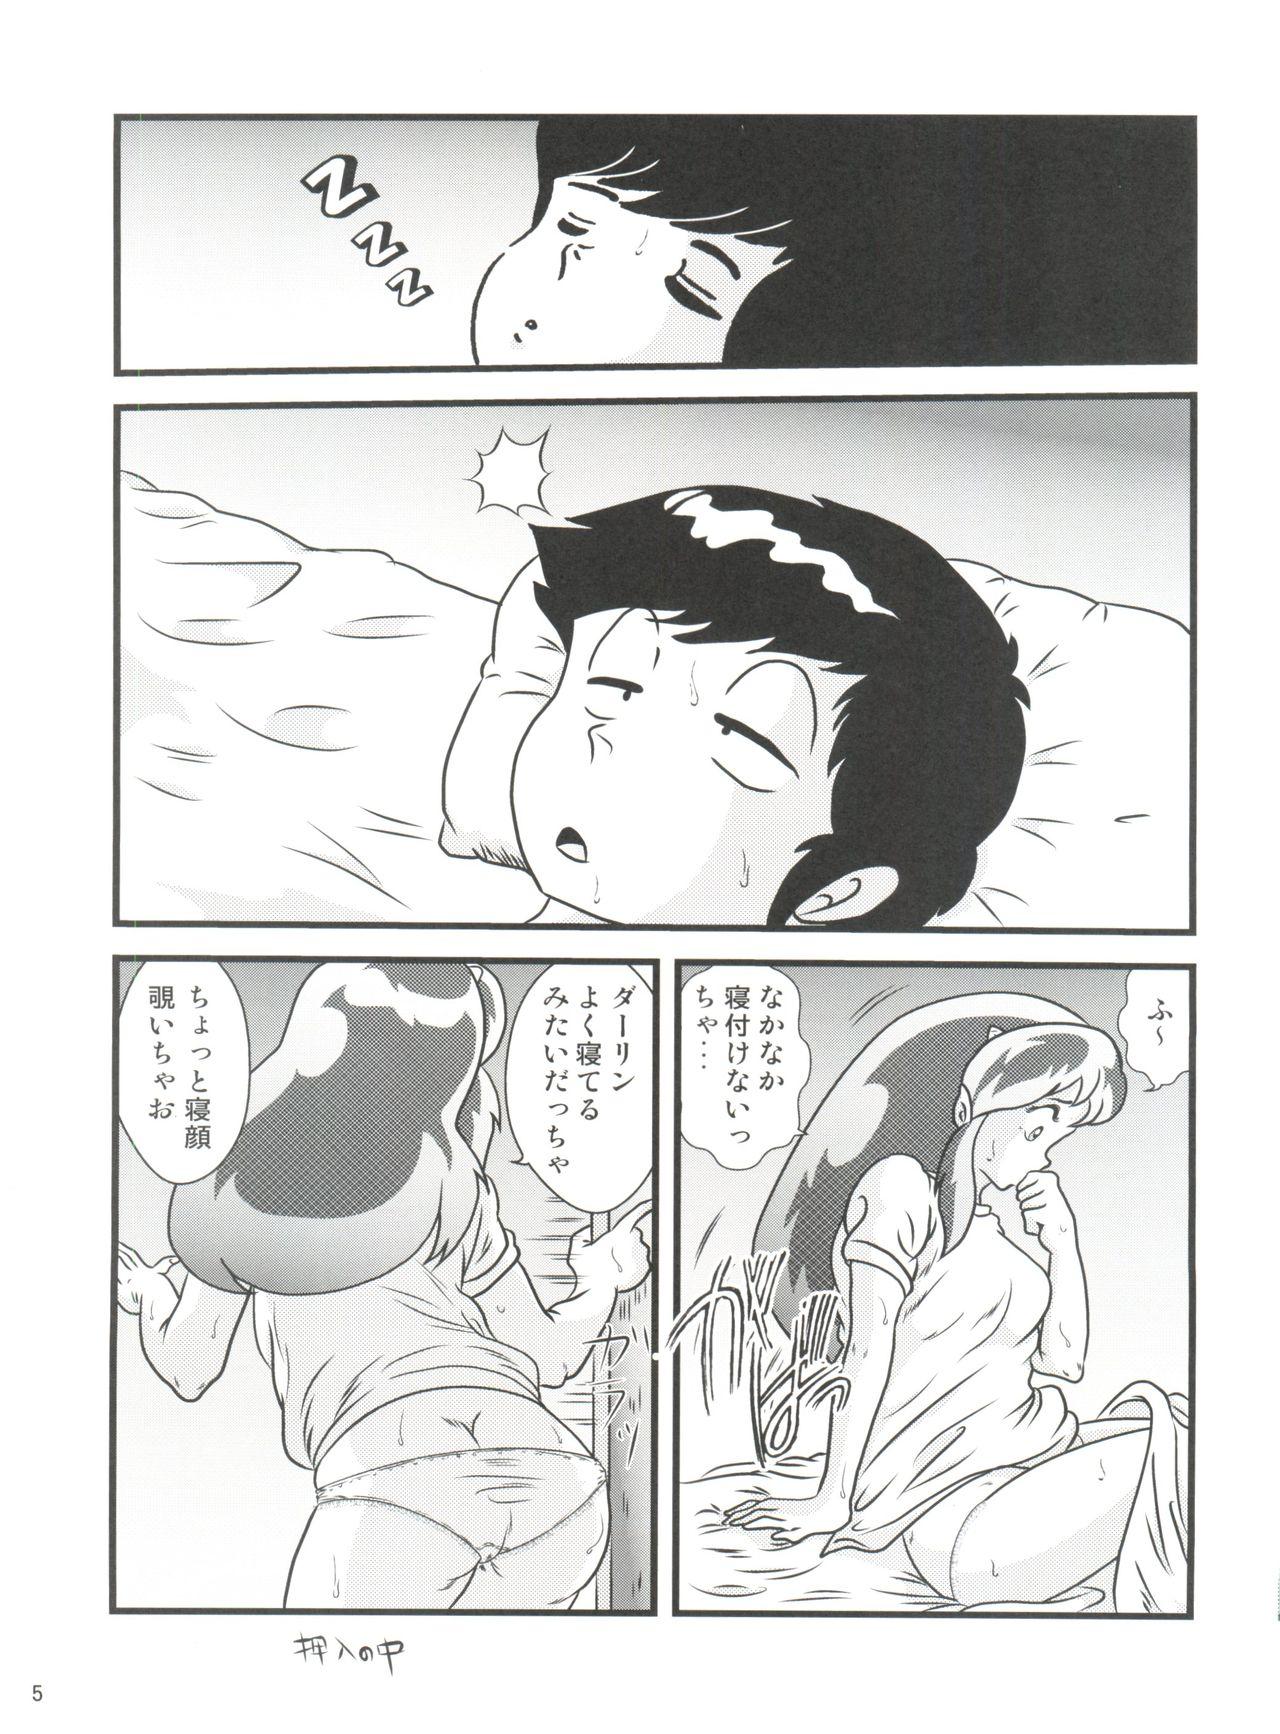 Emo Fairy 3R - Urusei yatsura Village - Page 5